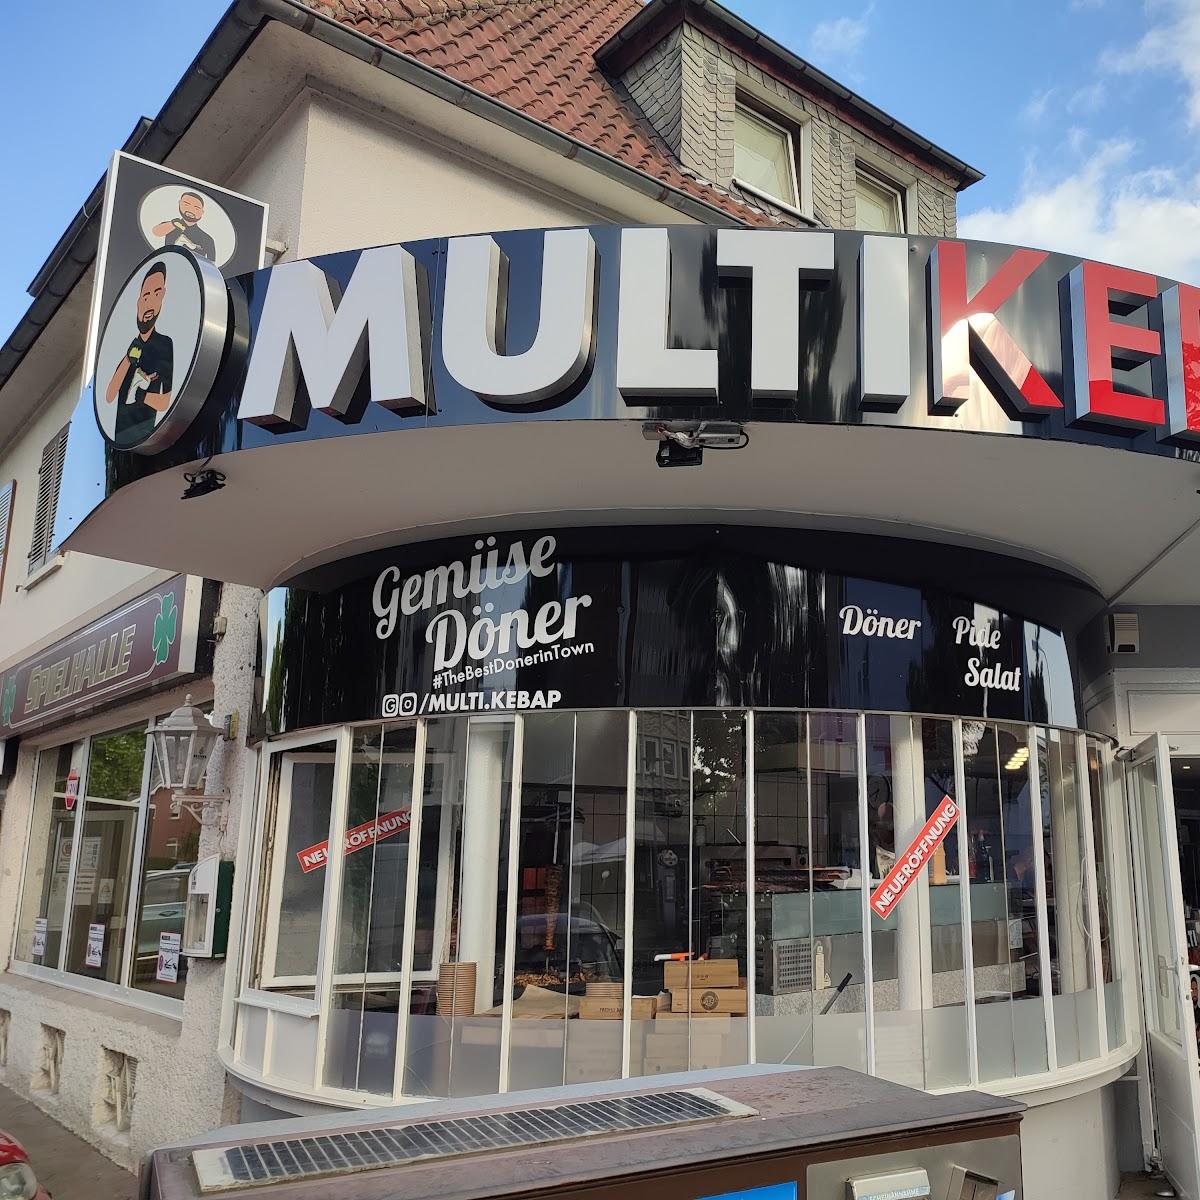 Restaurant "Multikebap2" in Lünen